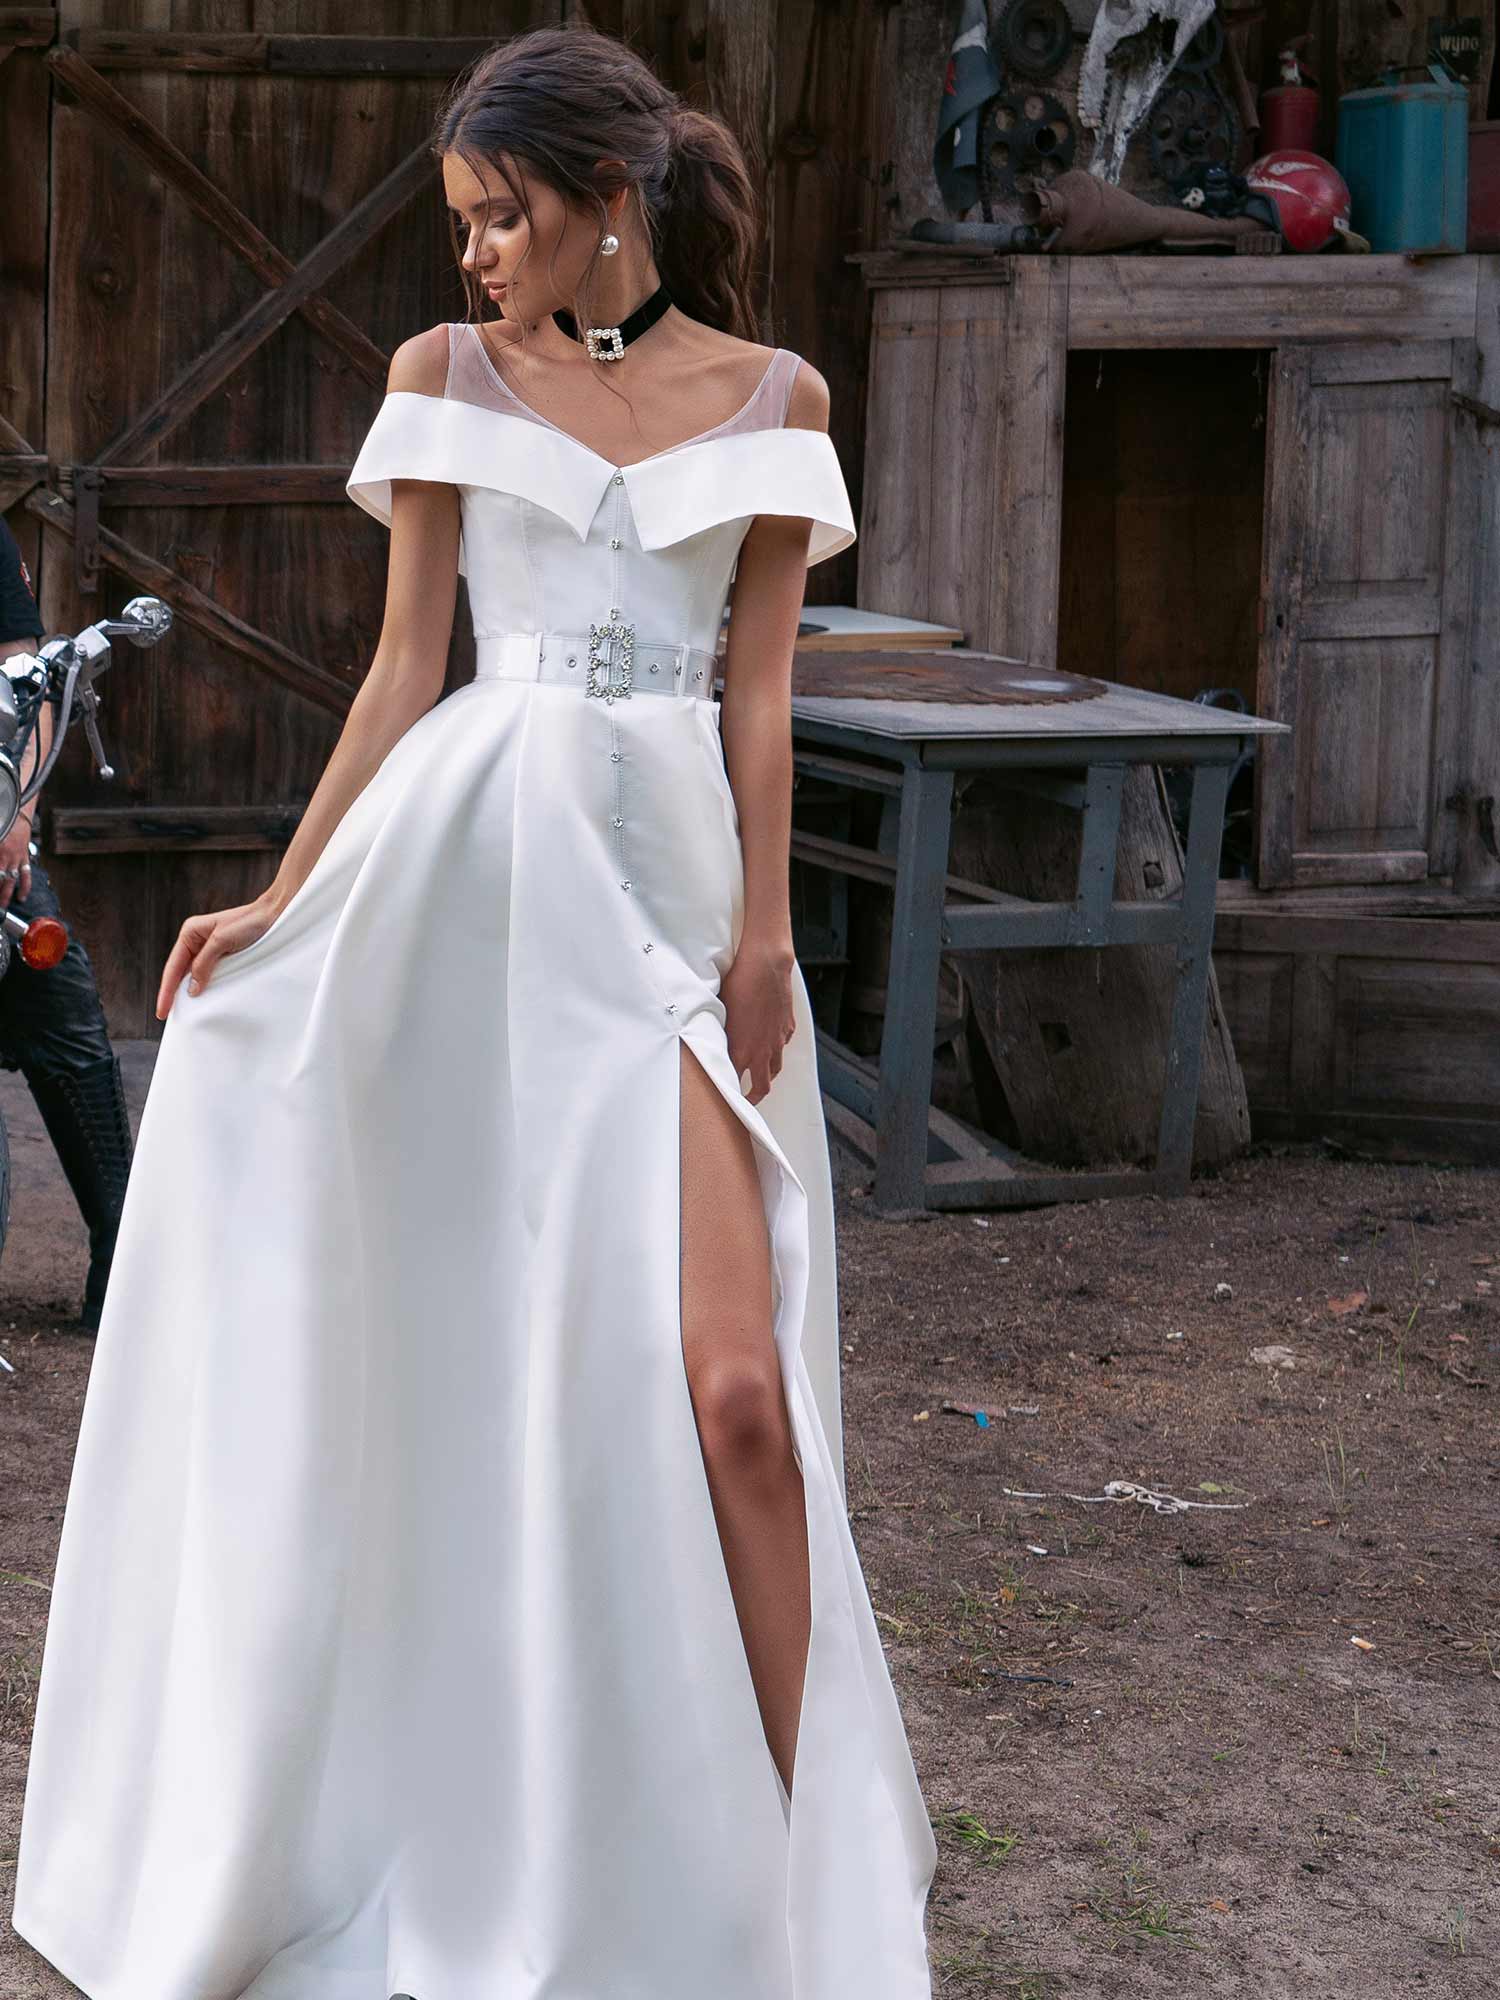 Modern wedding dress with slit up the leg